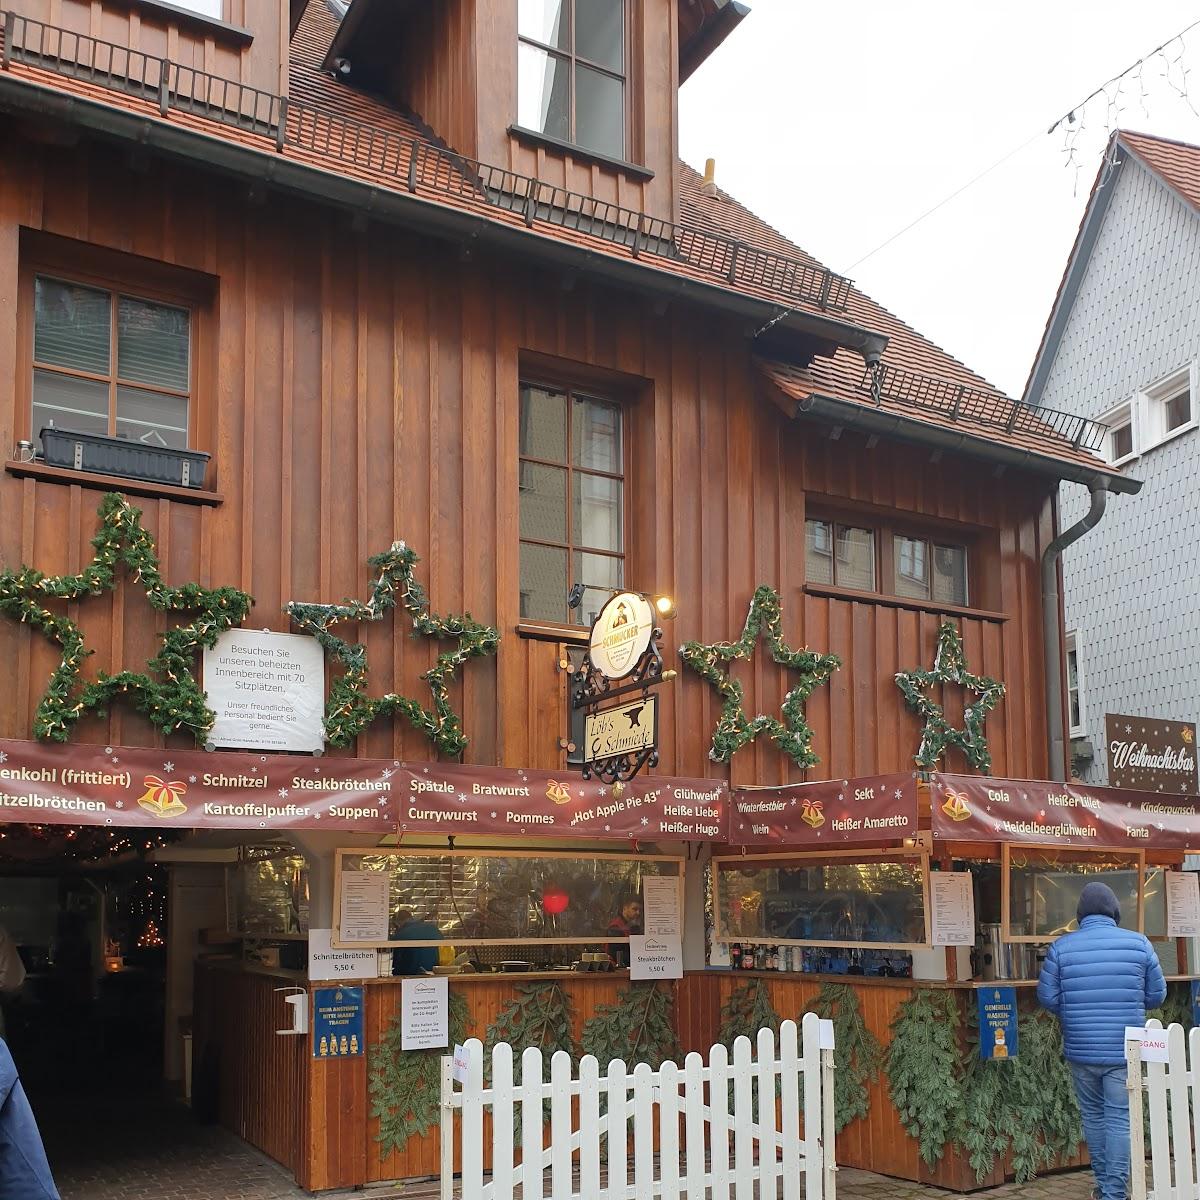 Restaurant "Löb